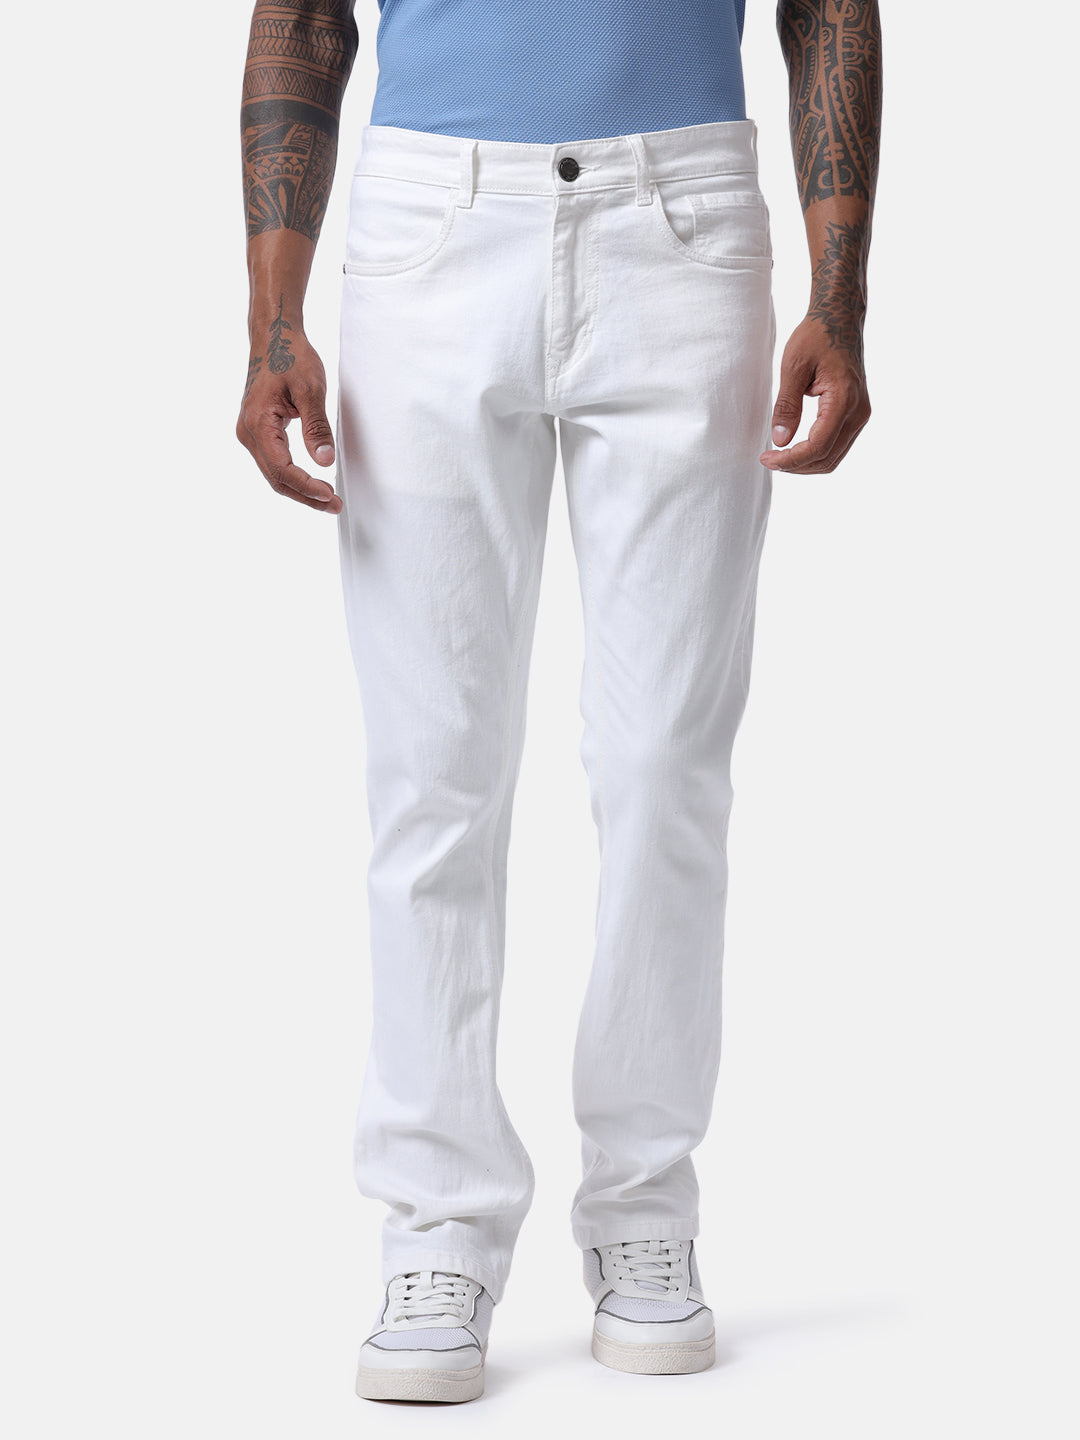 White Suave Classic Jeans